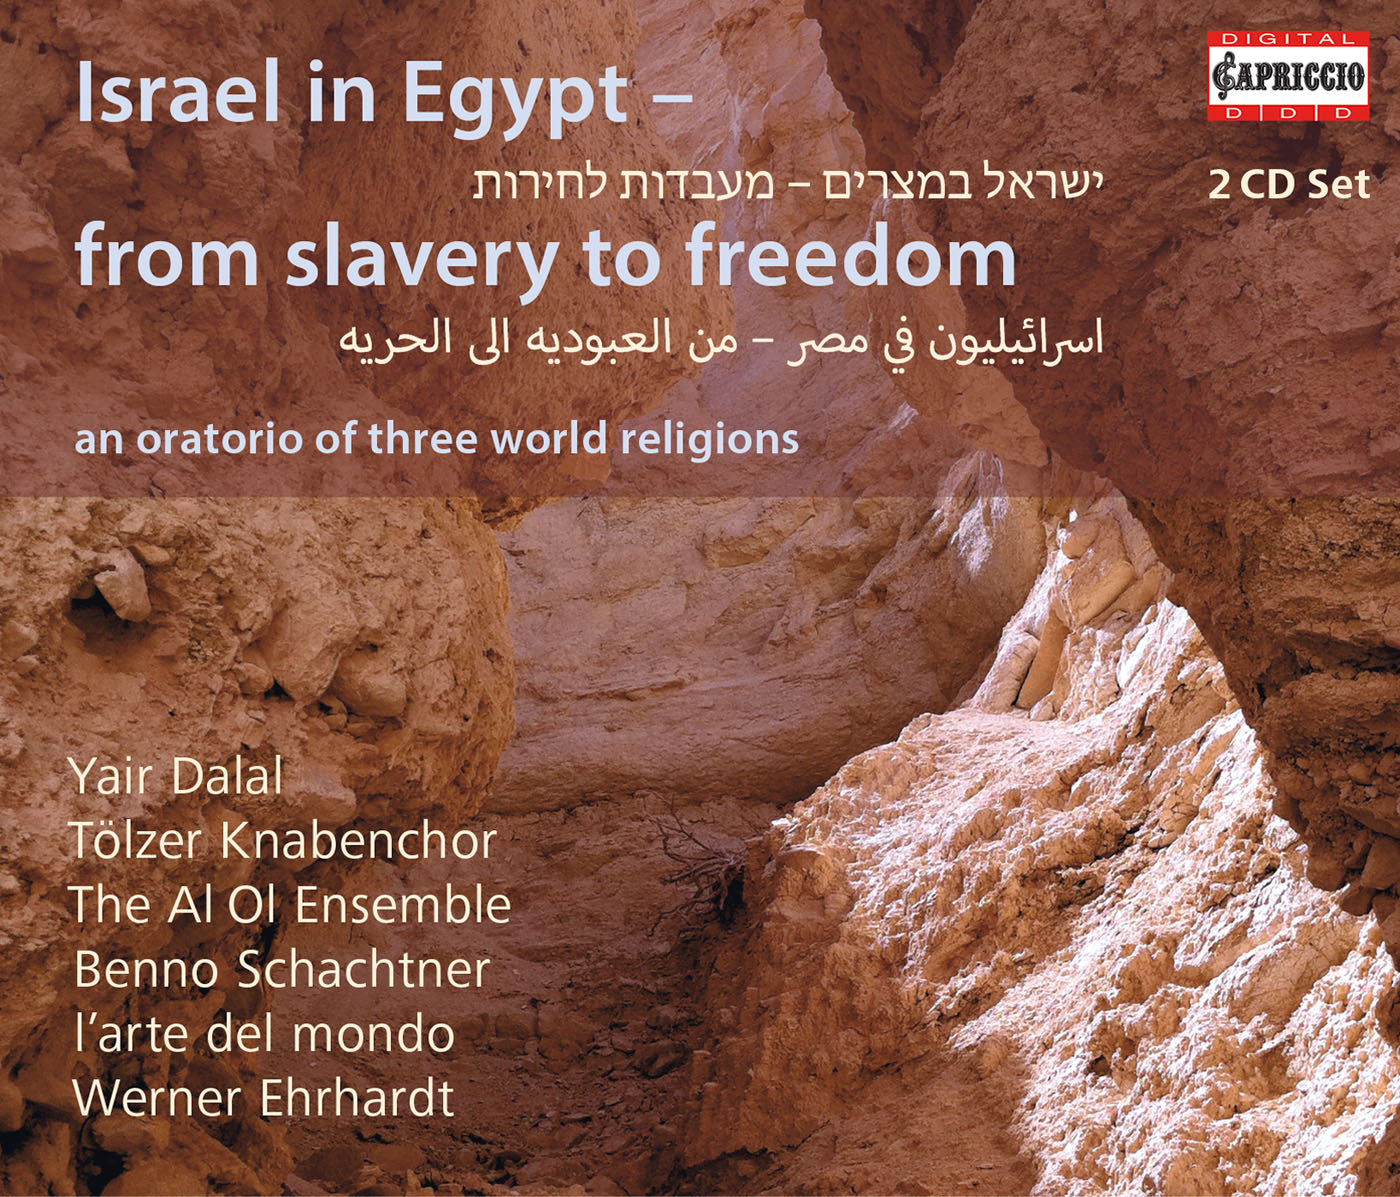 Handel: Israel In Egypt